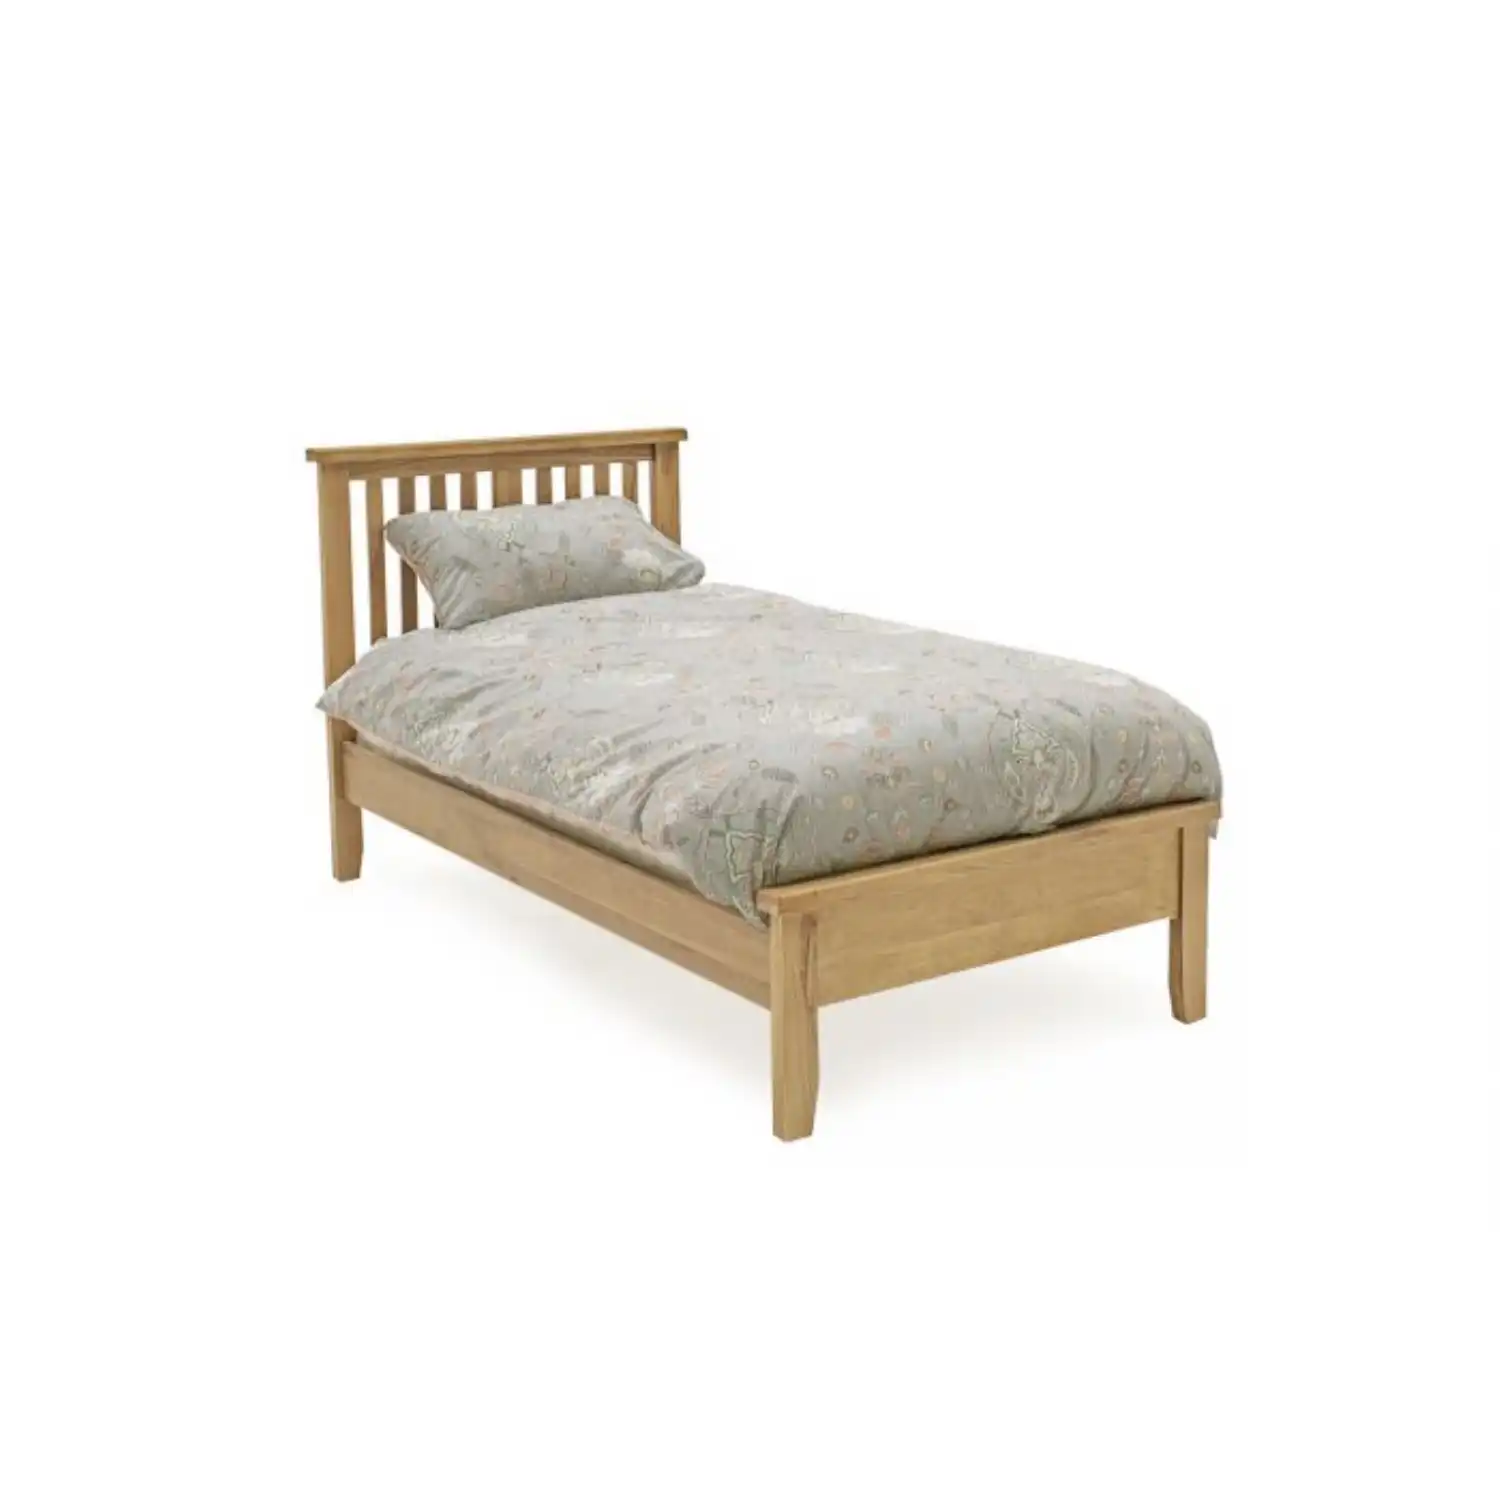 Traditional Oak Single Low Footend Bed